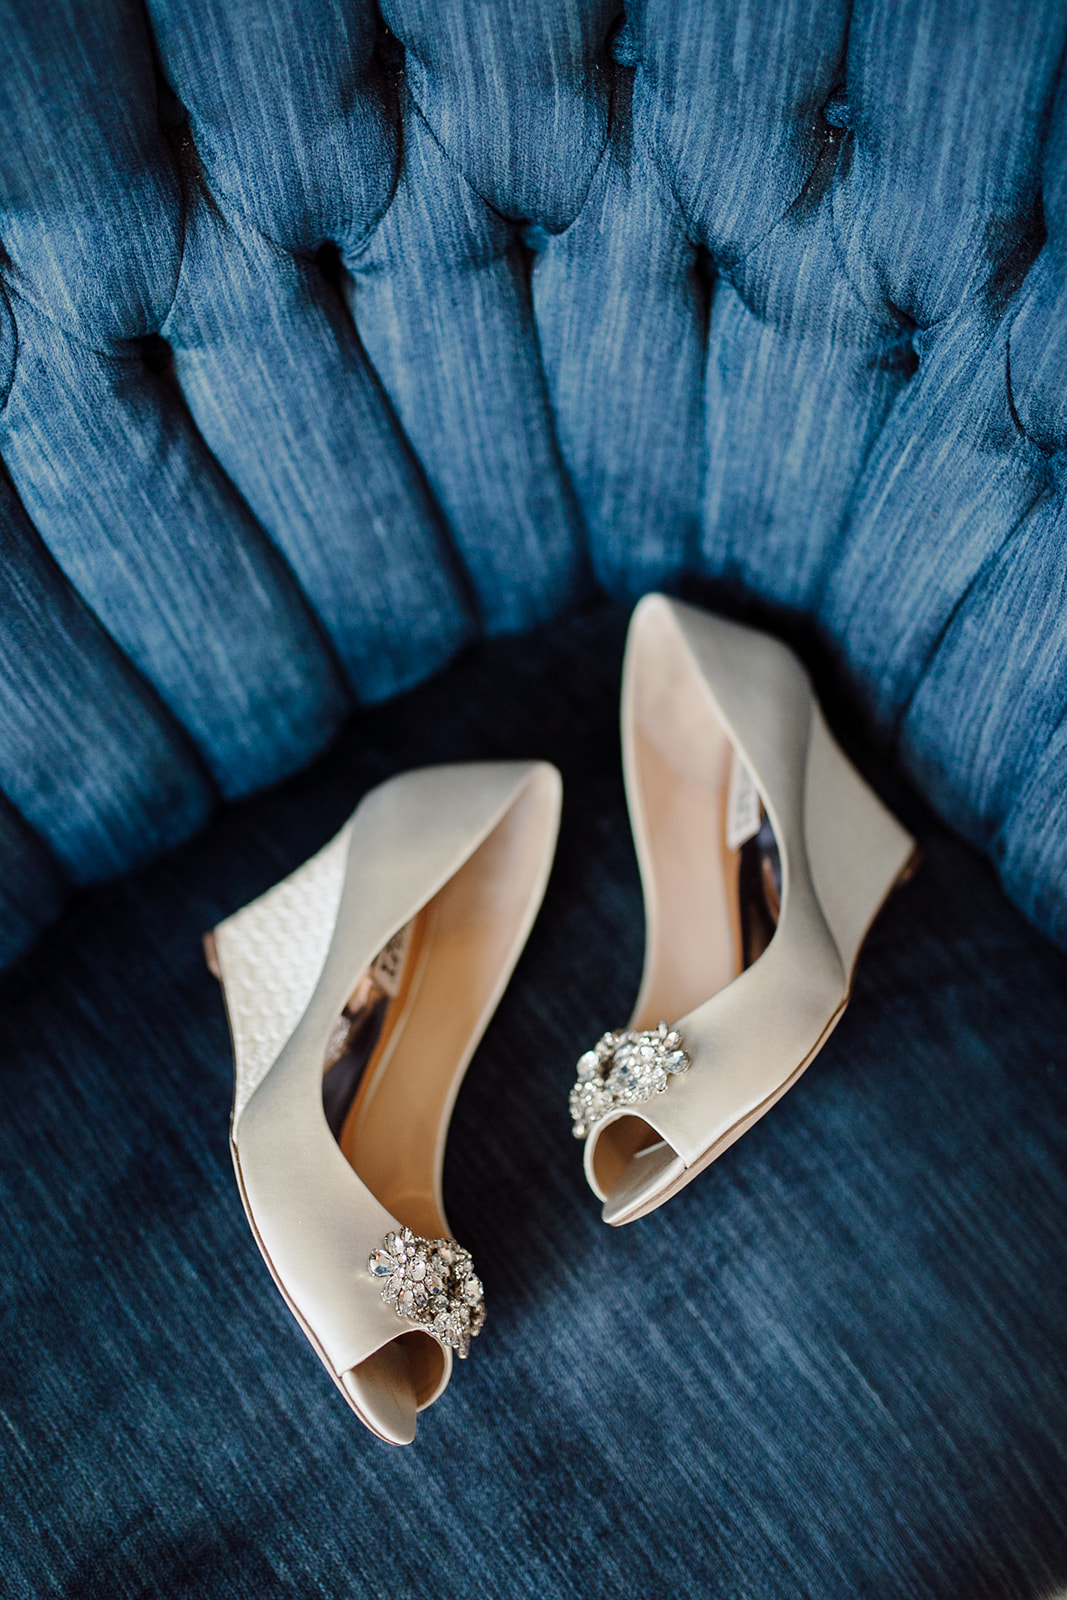 Peep toe bridal shoe wedges